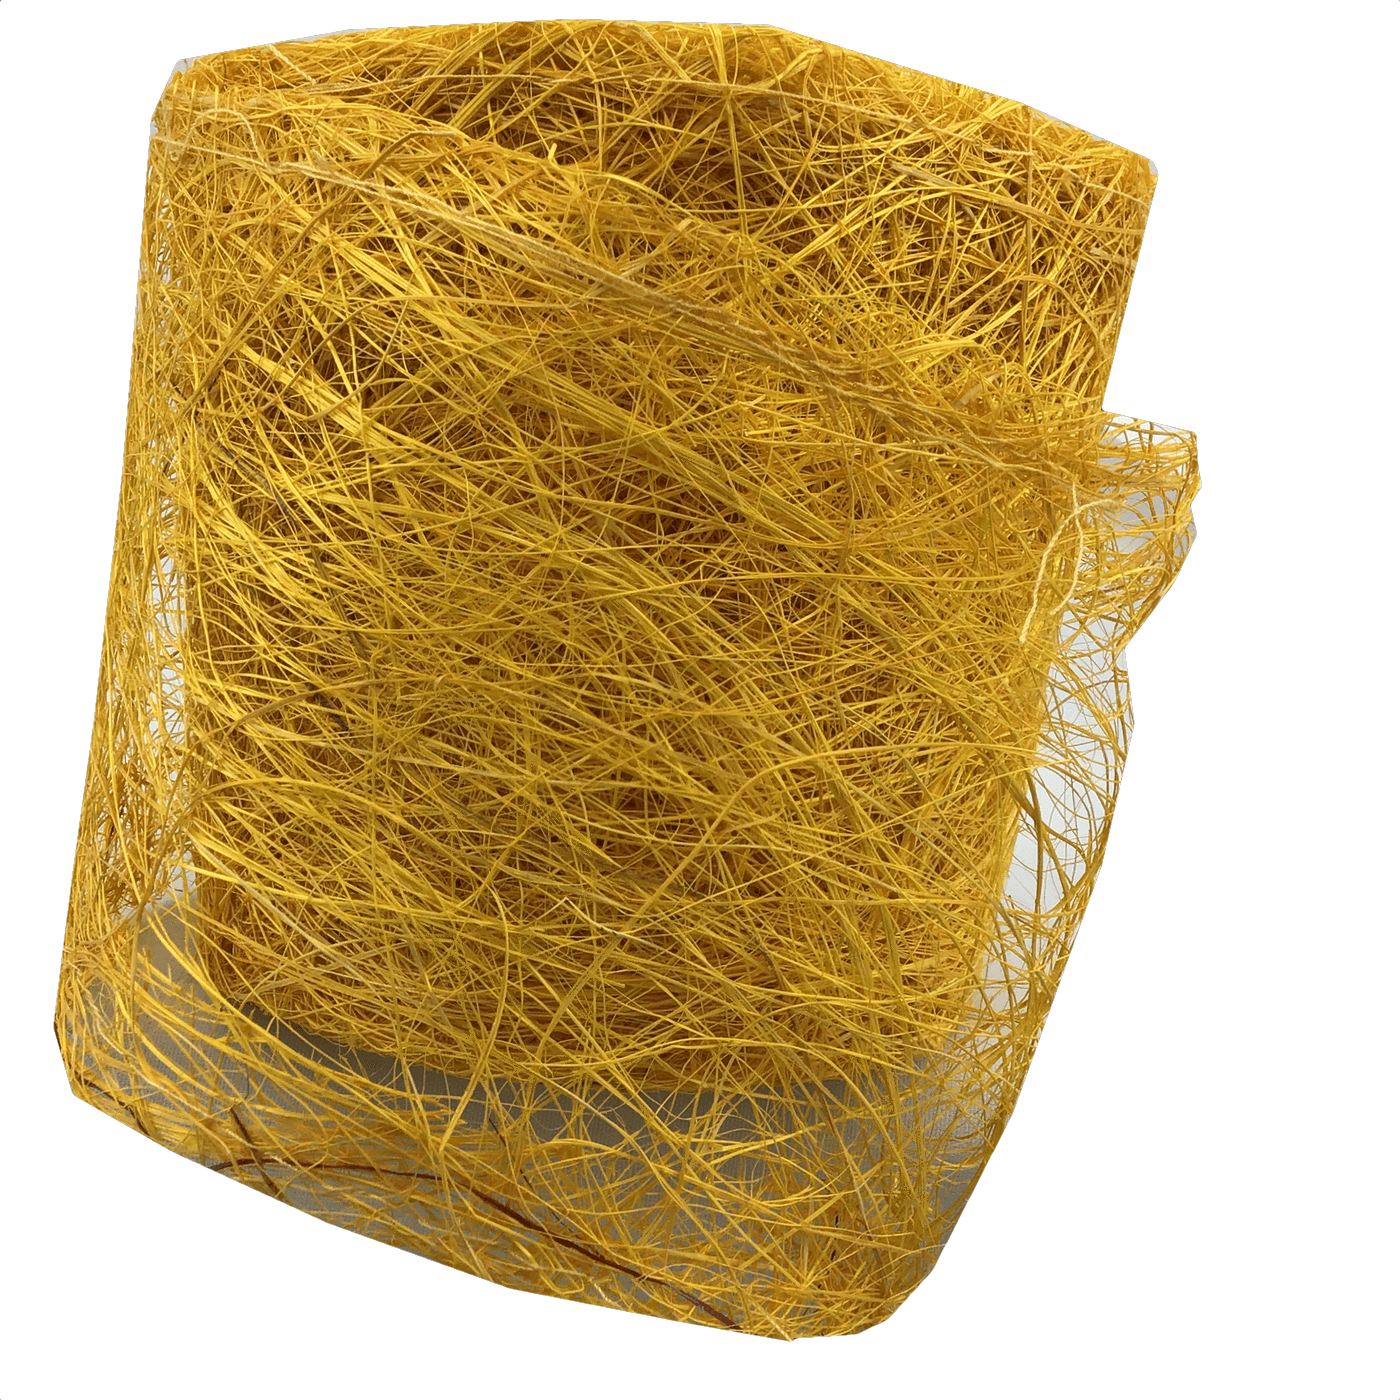 4 Inch by 10 Yards Banana Weave Designer Netting Gold